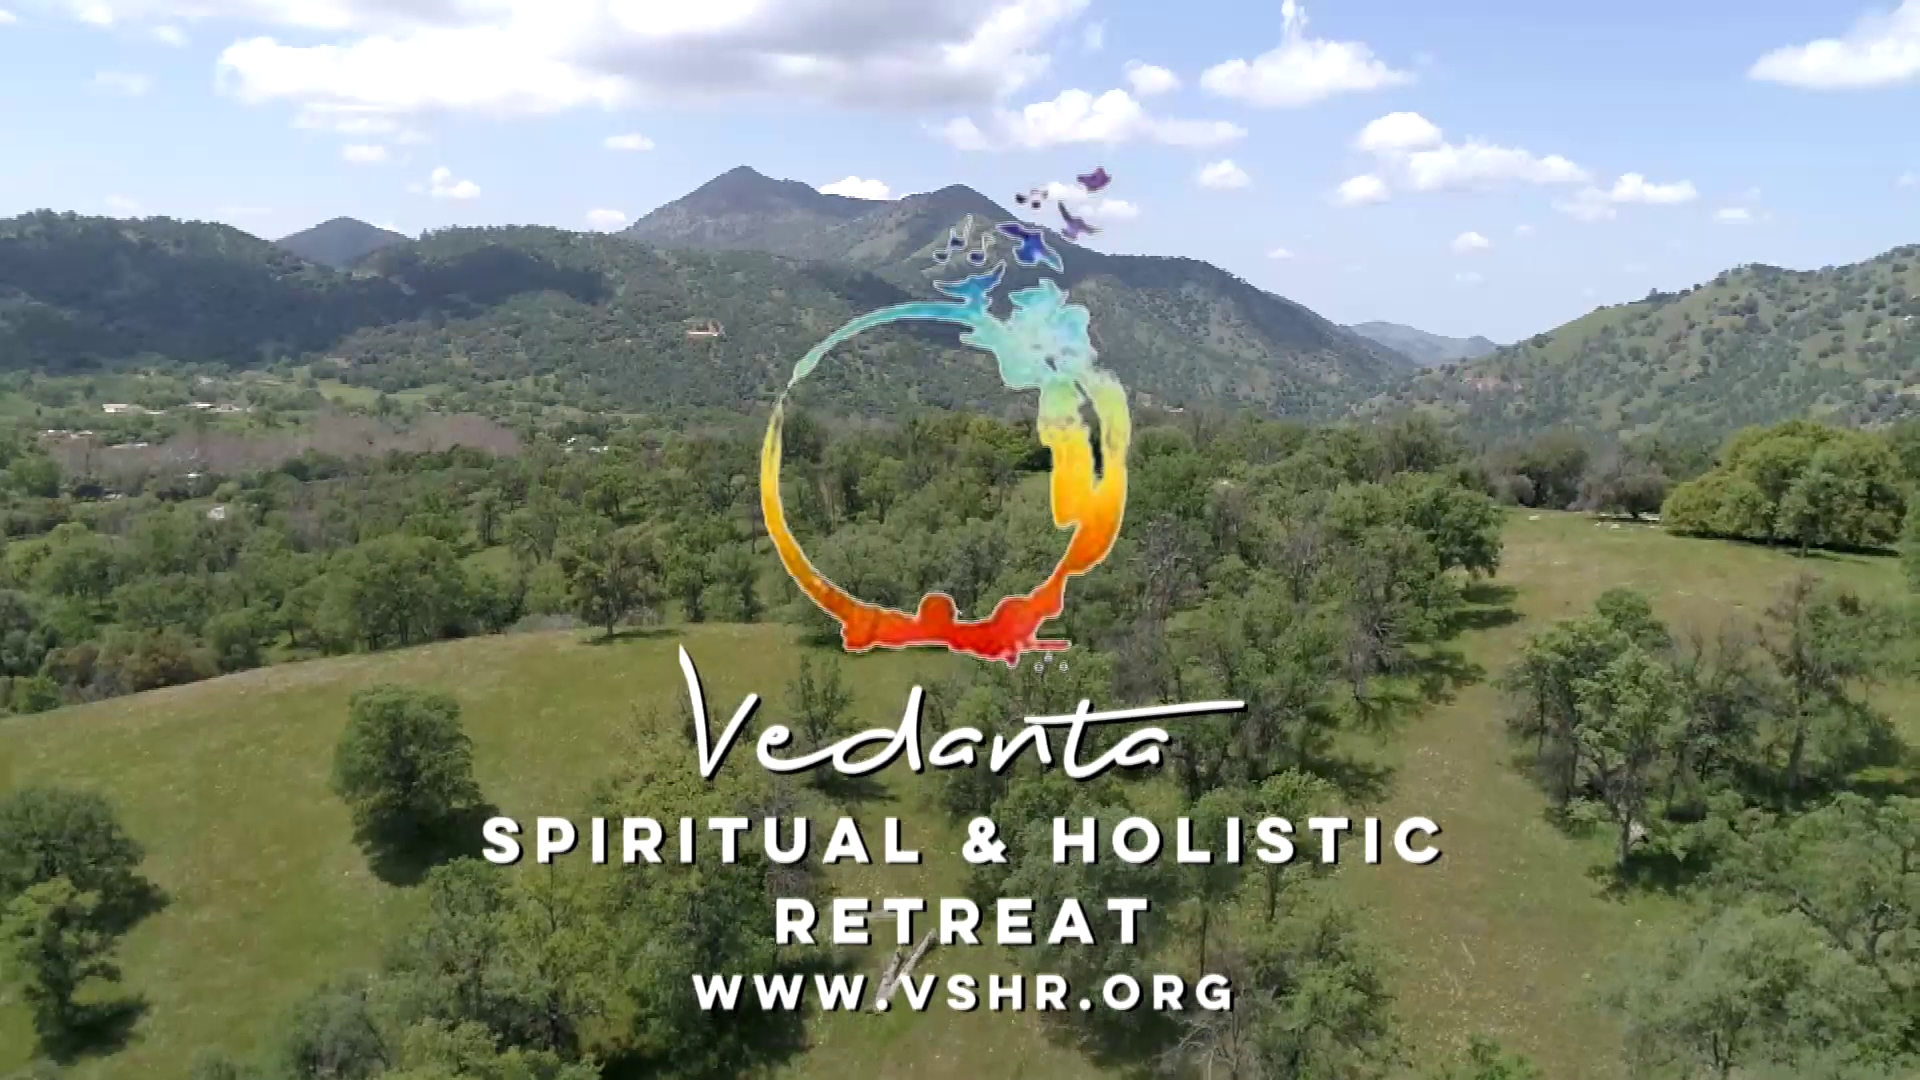 Vedanta Spiritual & Holistic Retreat 41208 Hot Springs Dr, California Hot Springs California 93207